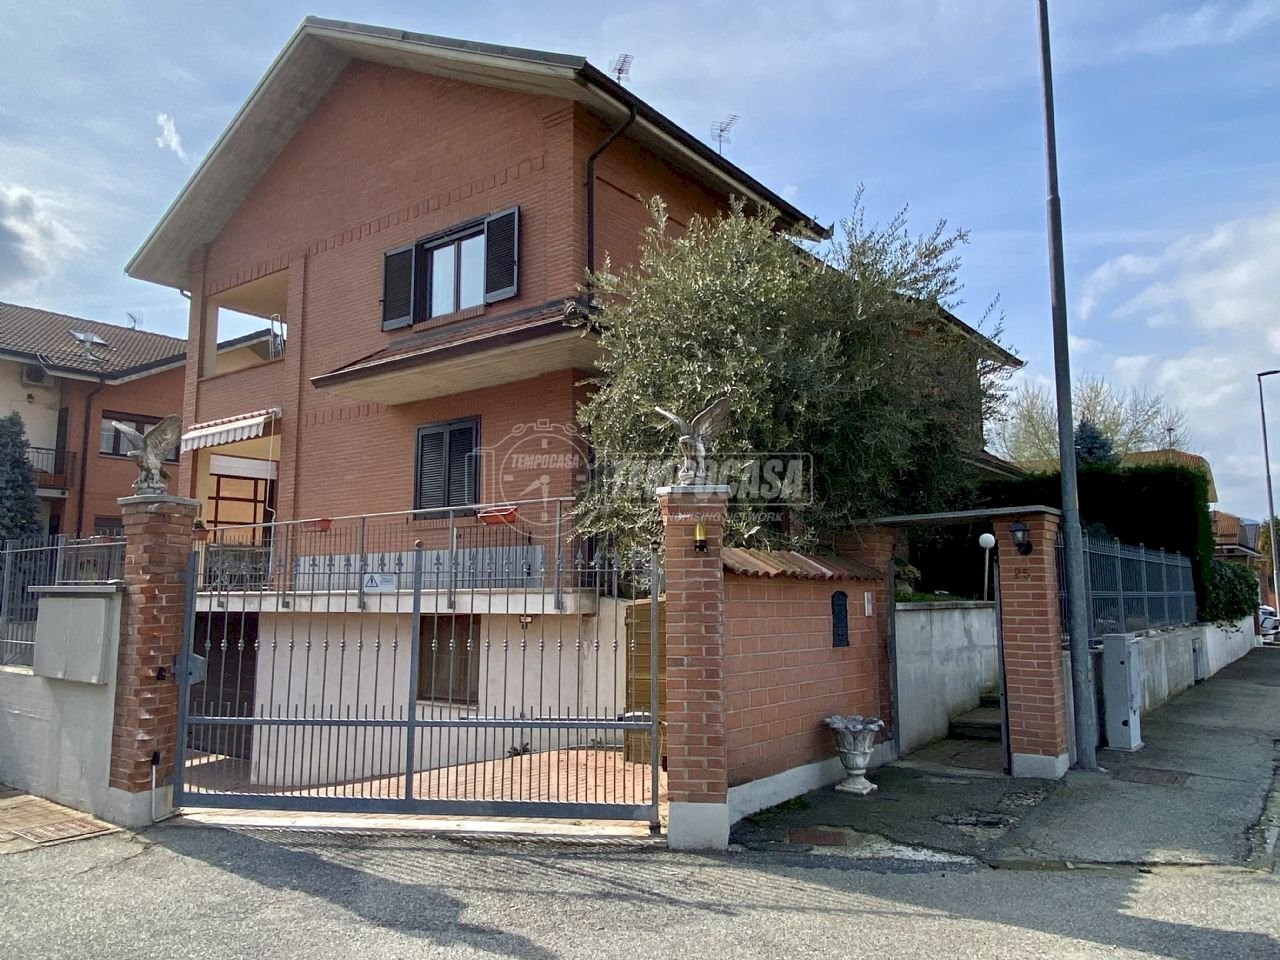 Vendita Villa Unifamiliare Via Pordenone, Volvera